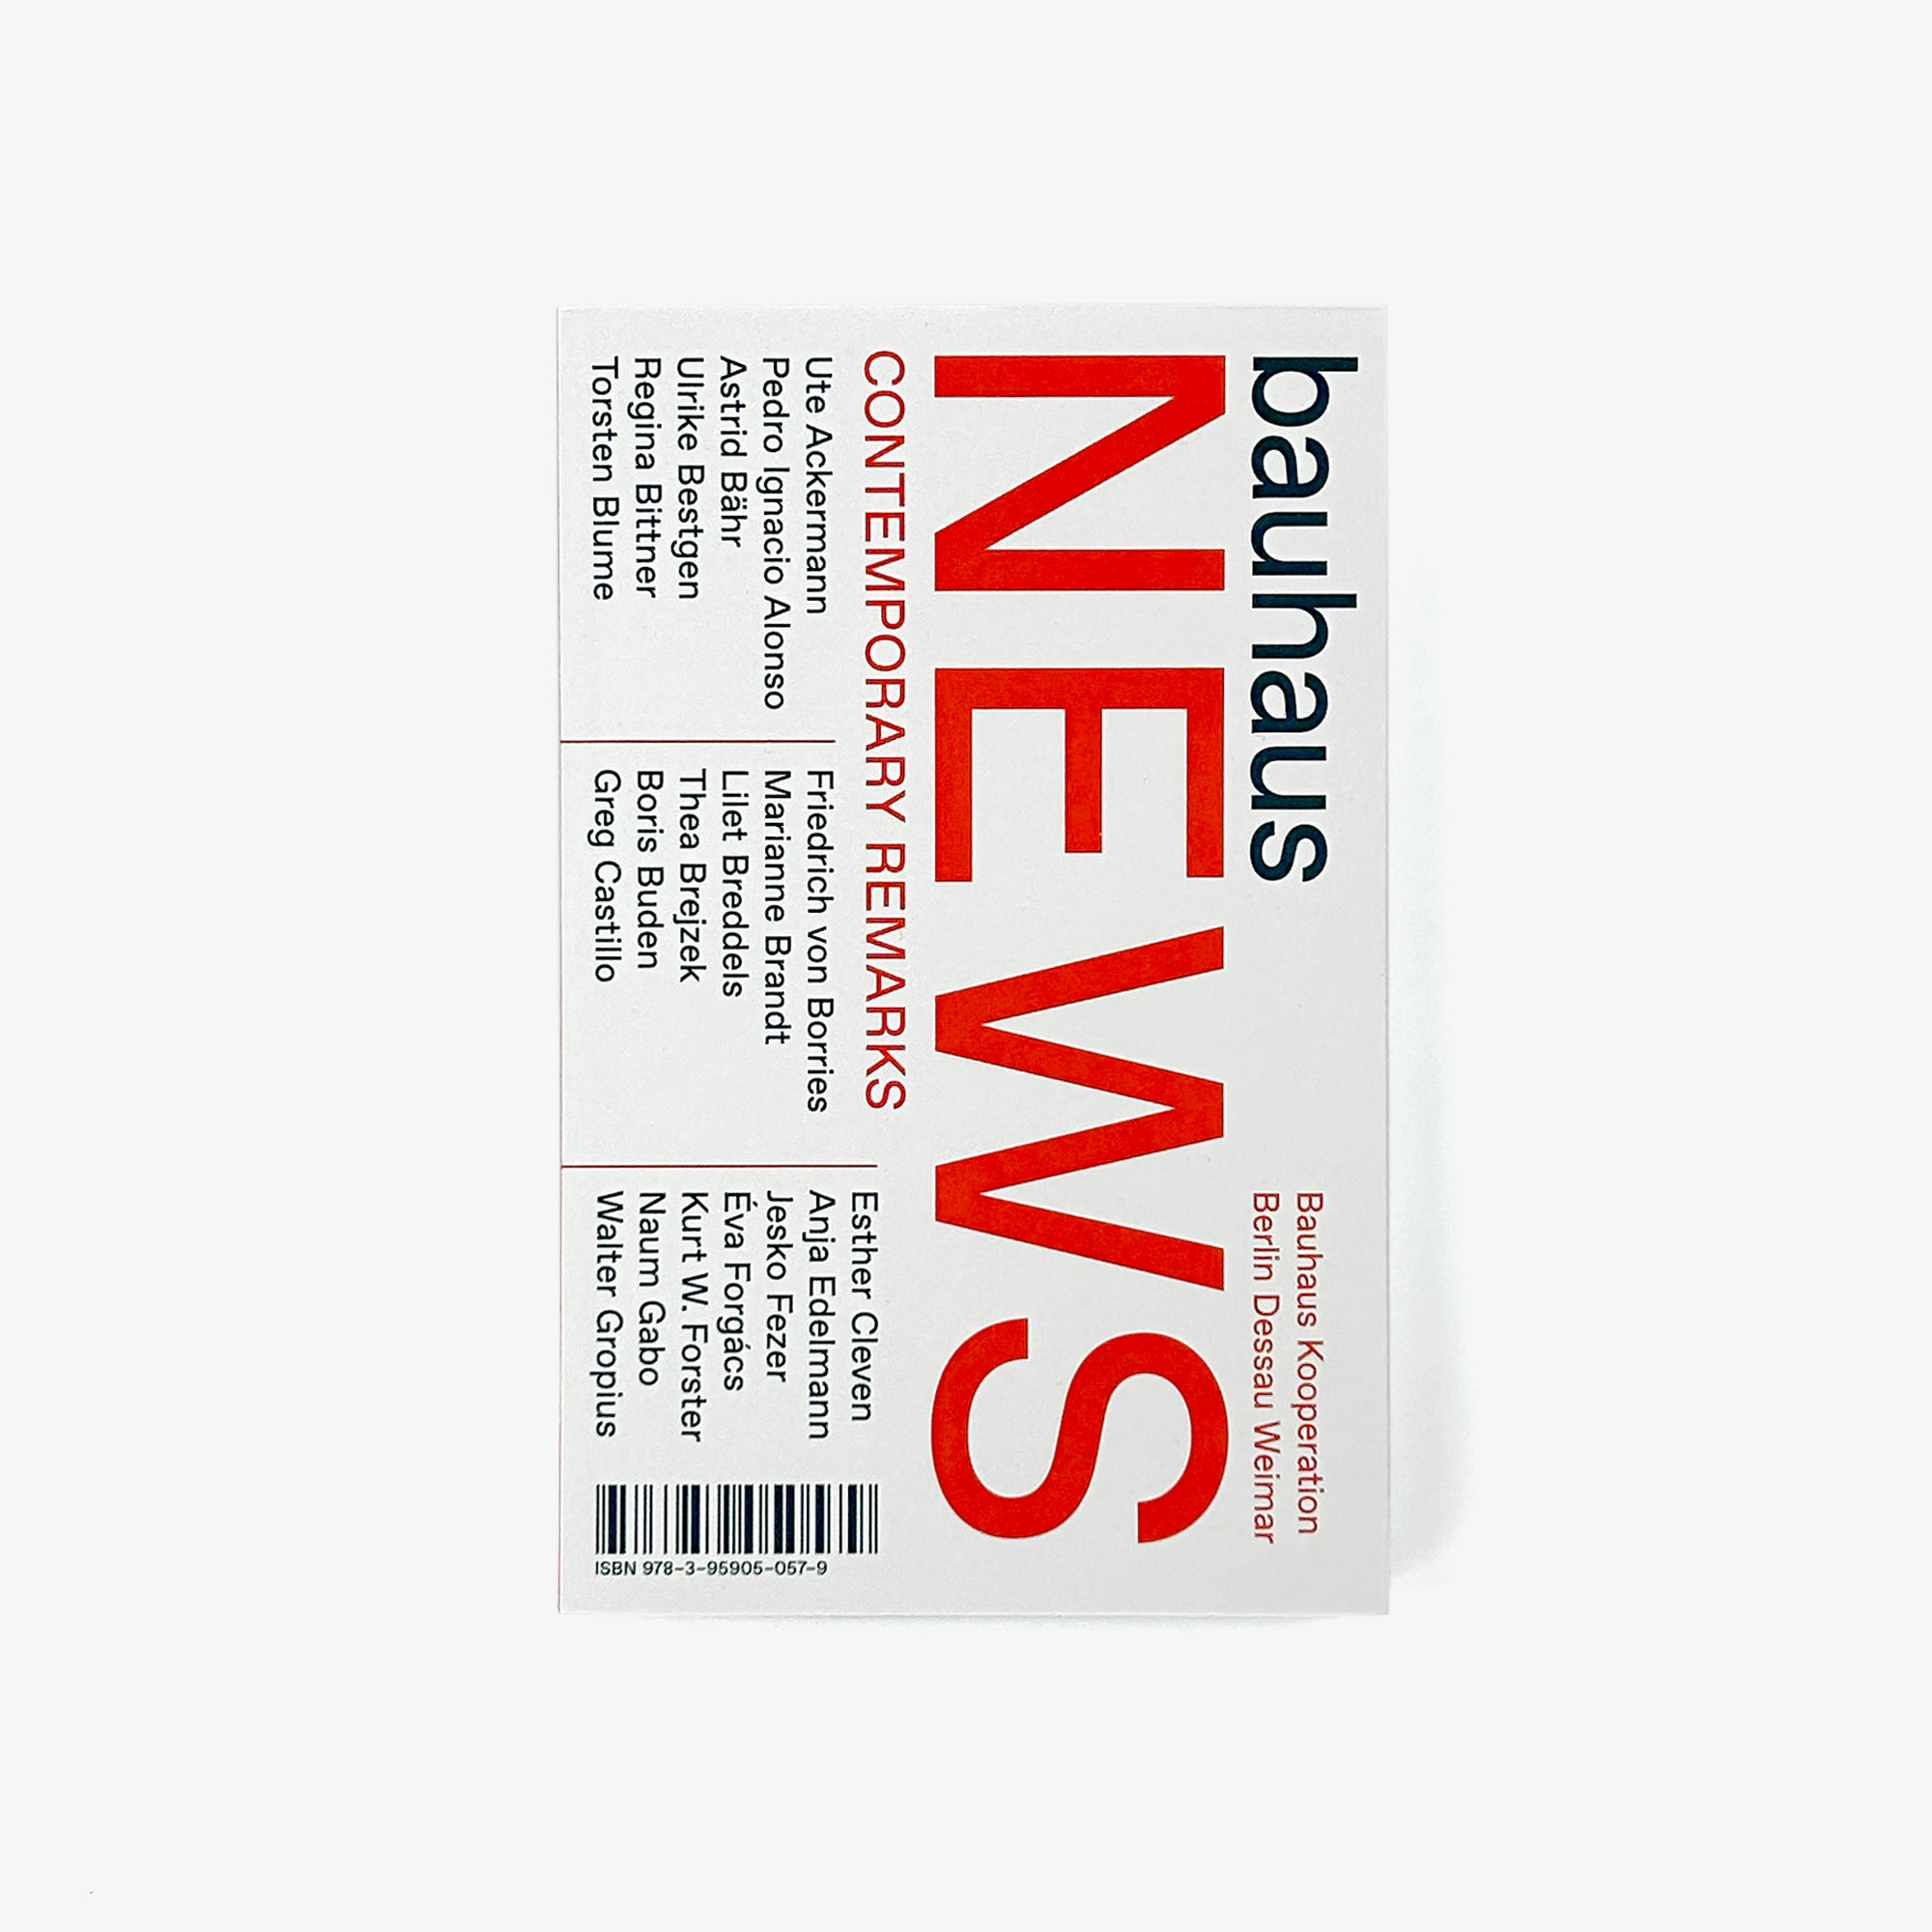 Bauhaus News